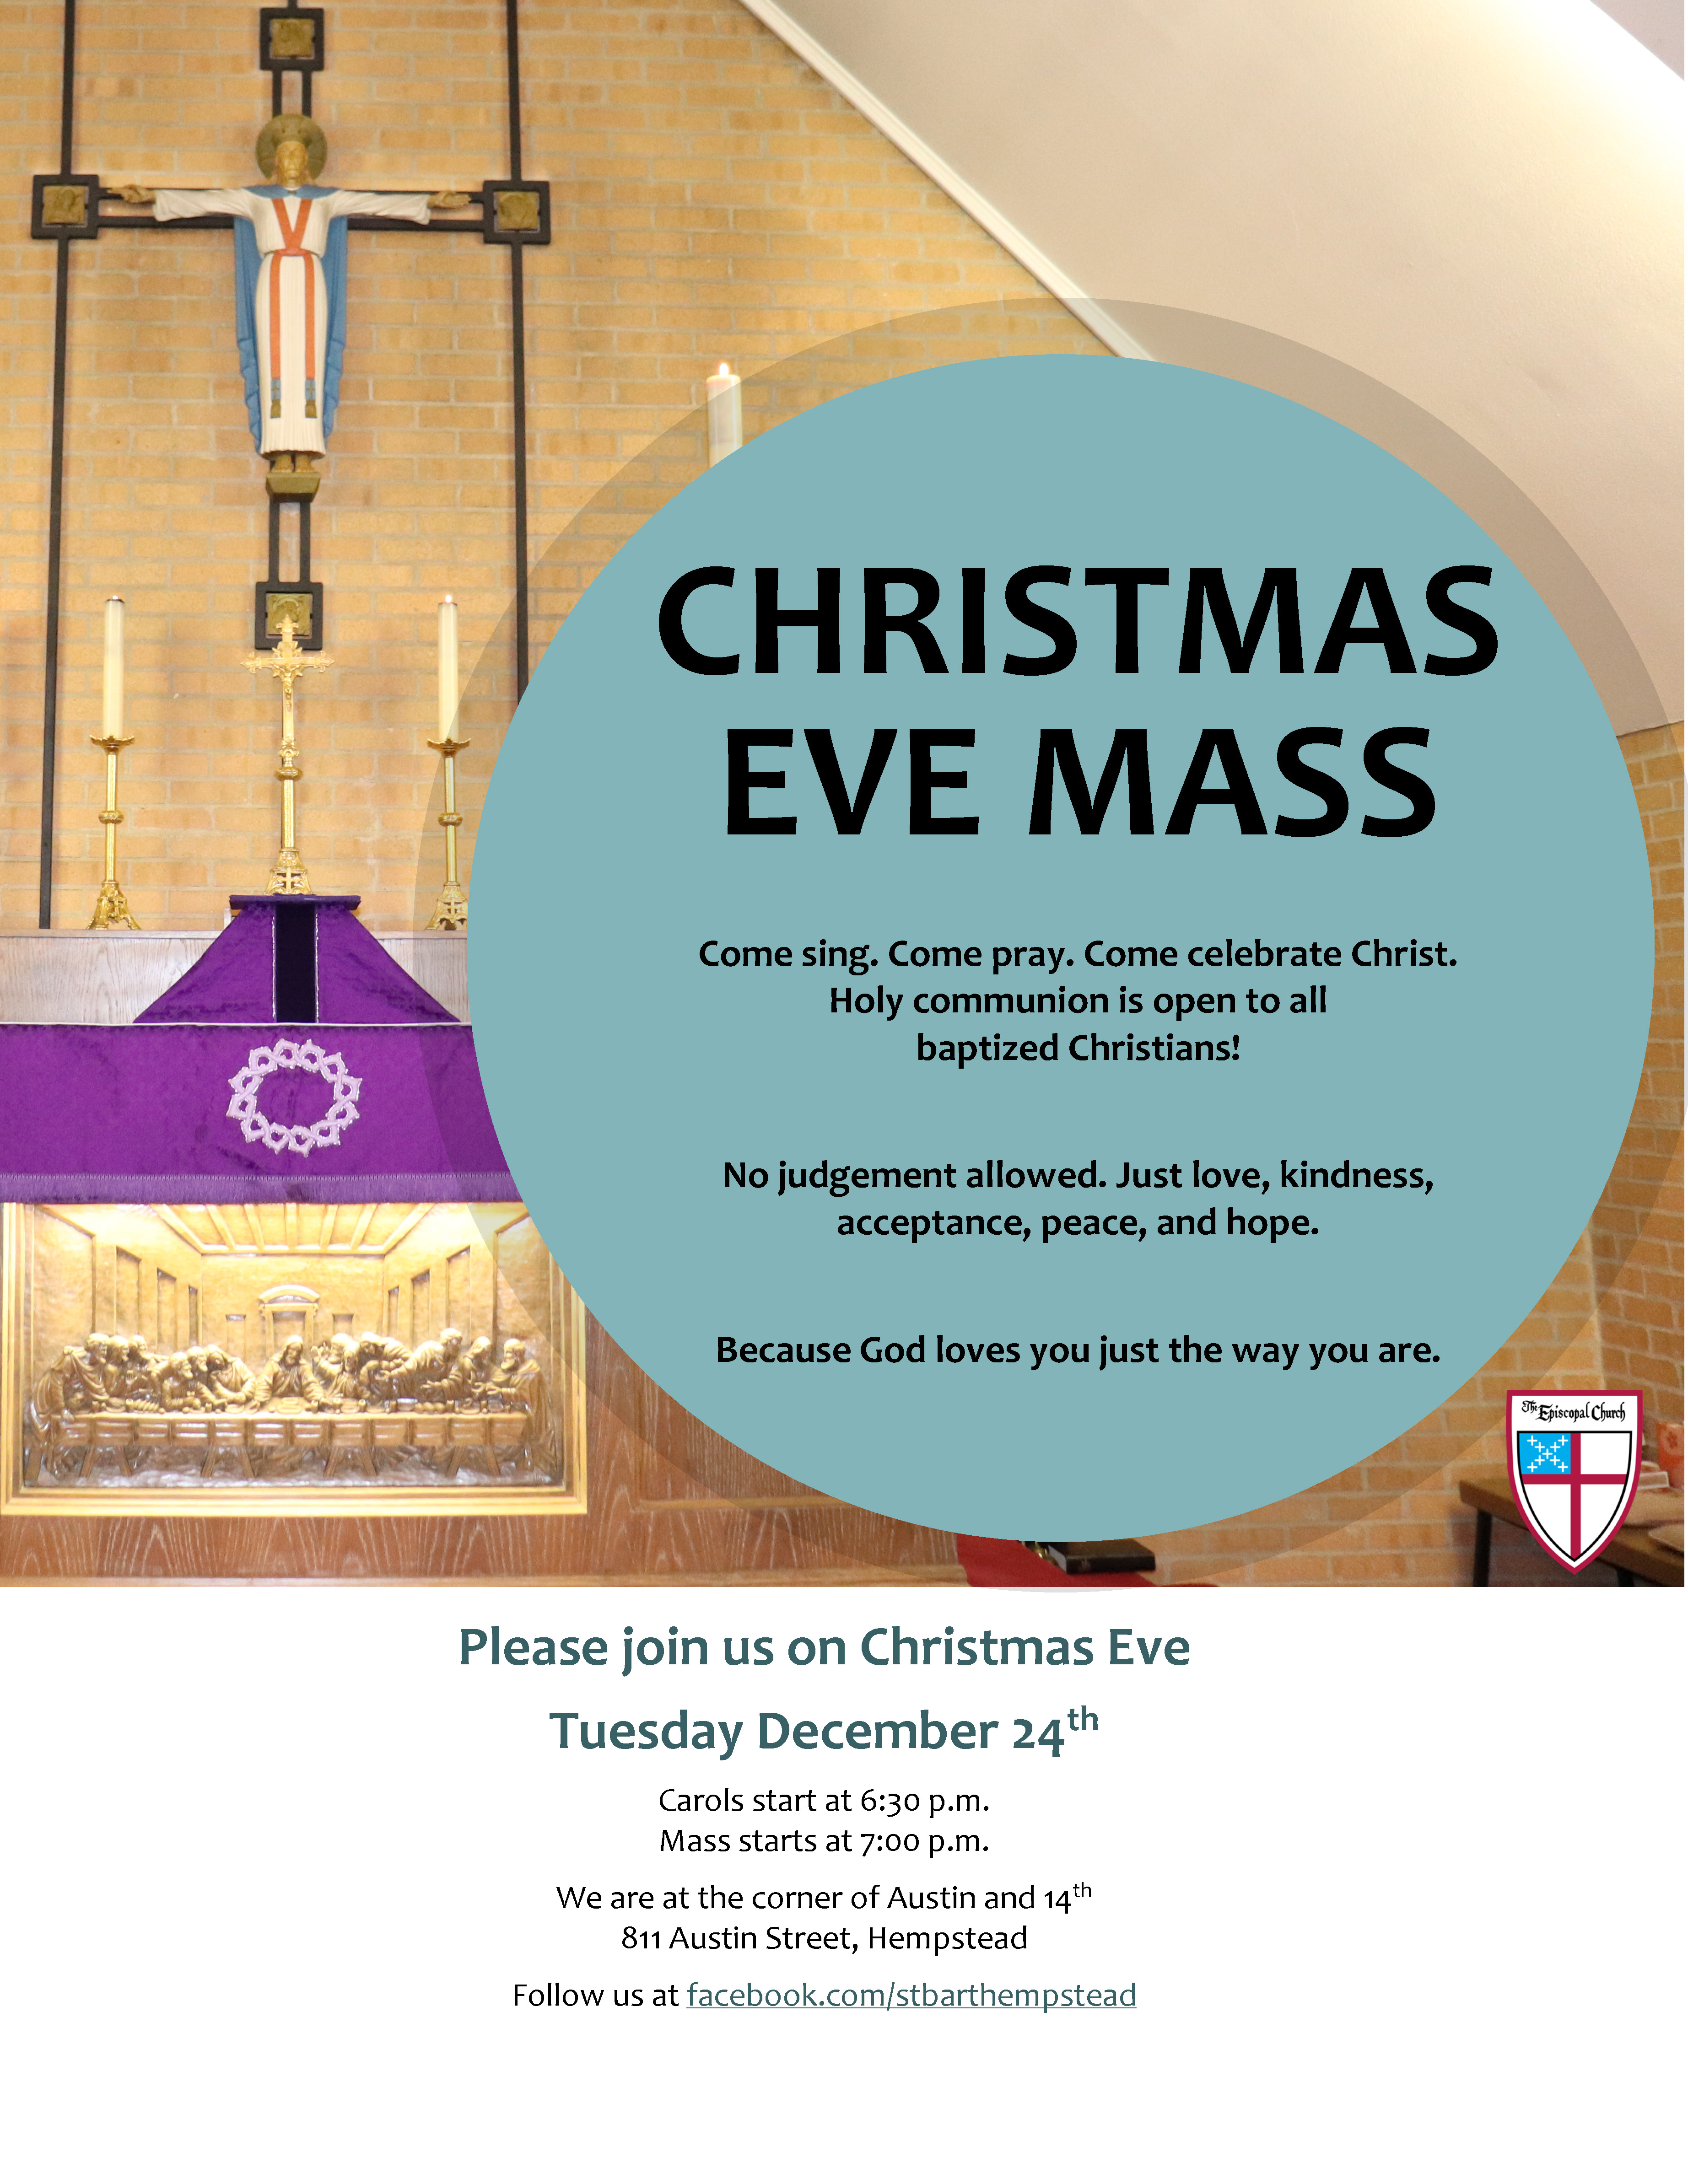 Flyer for Christmas Eve Mass